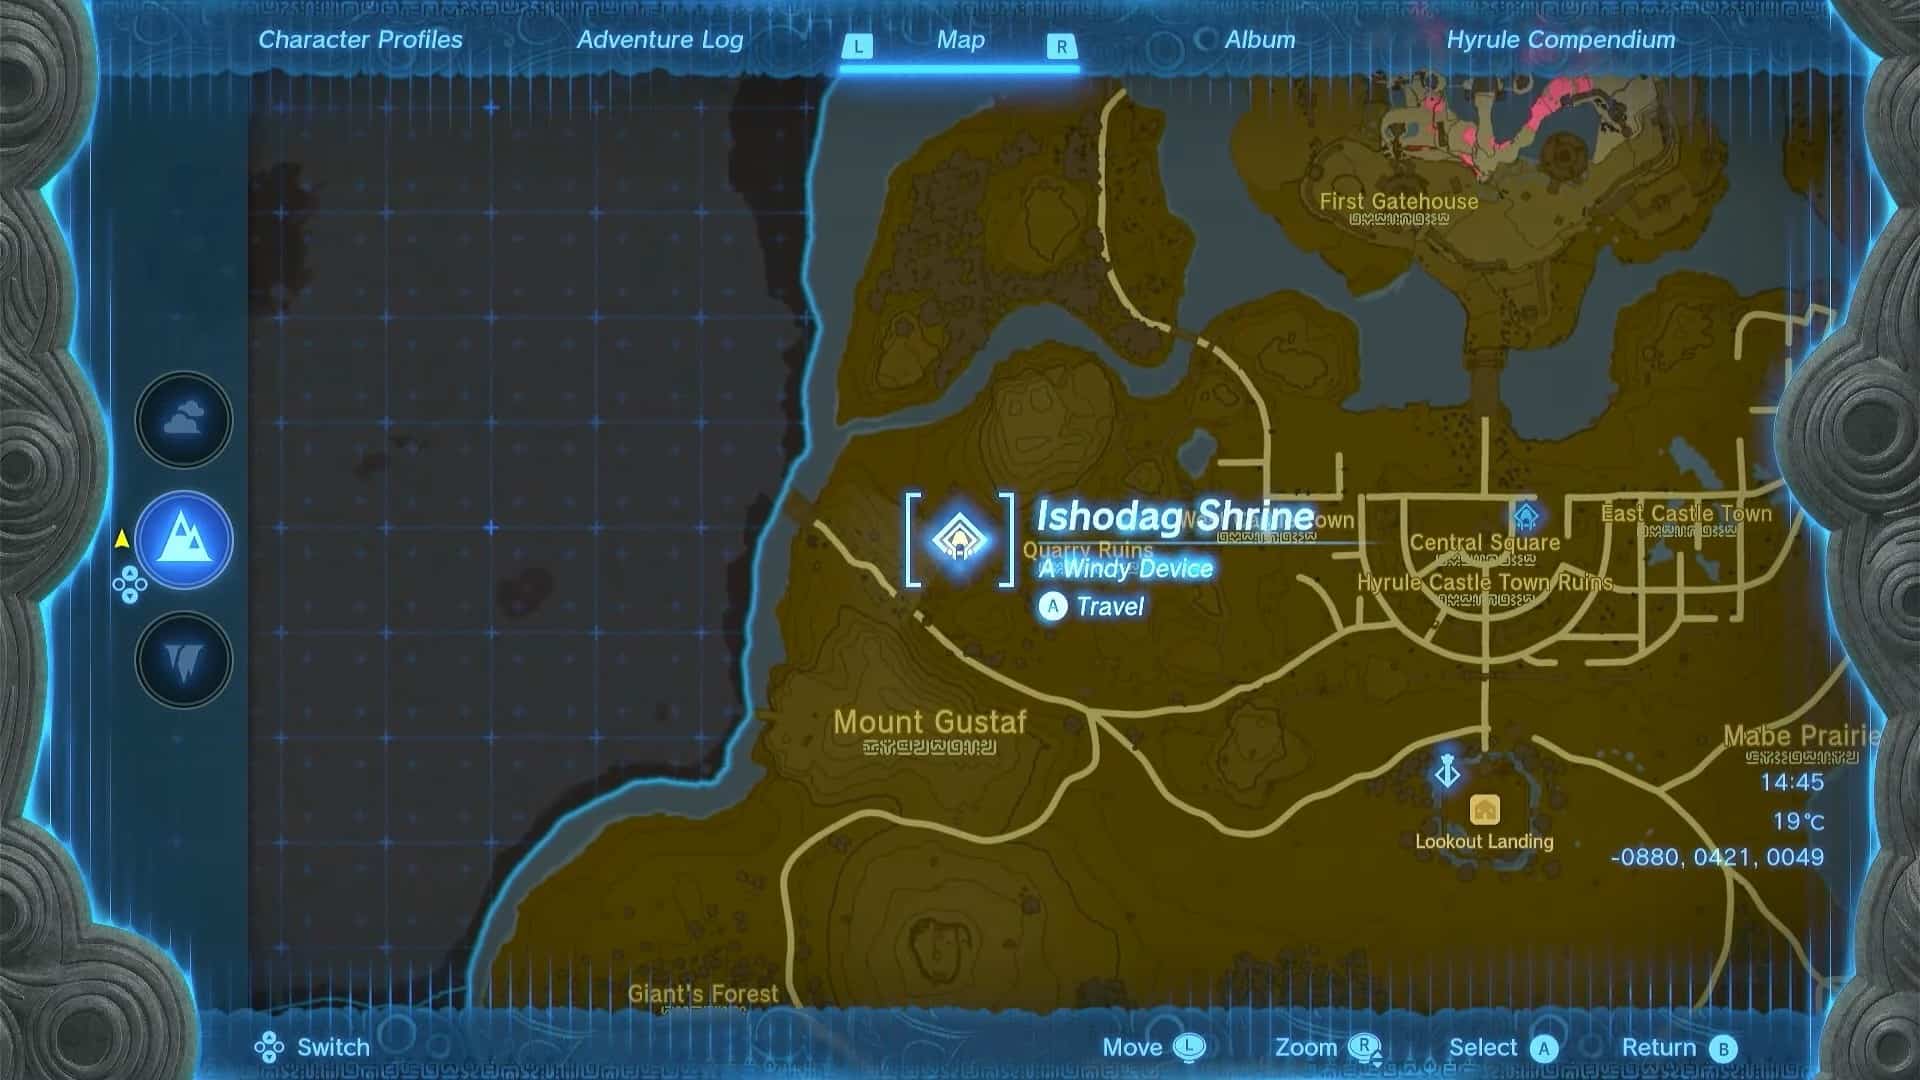 Zelda: TotK Ishodag Shrine location